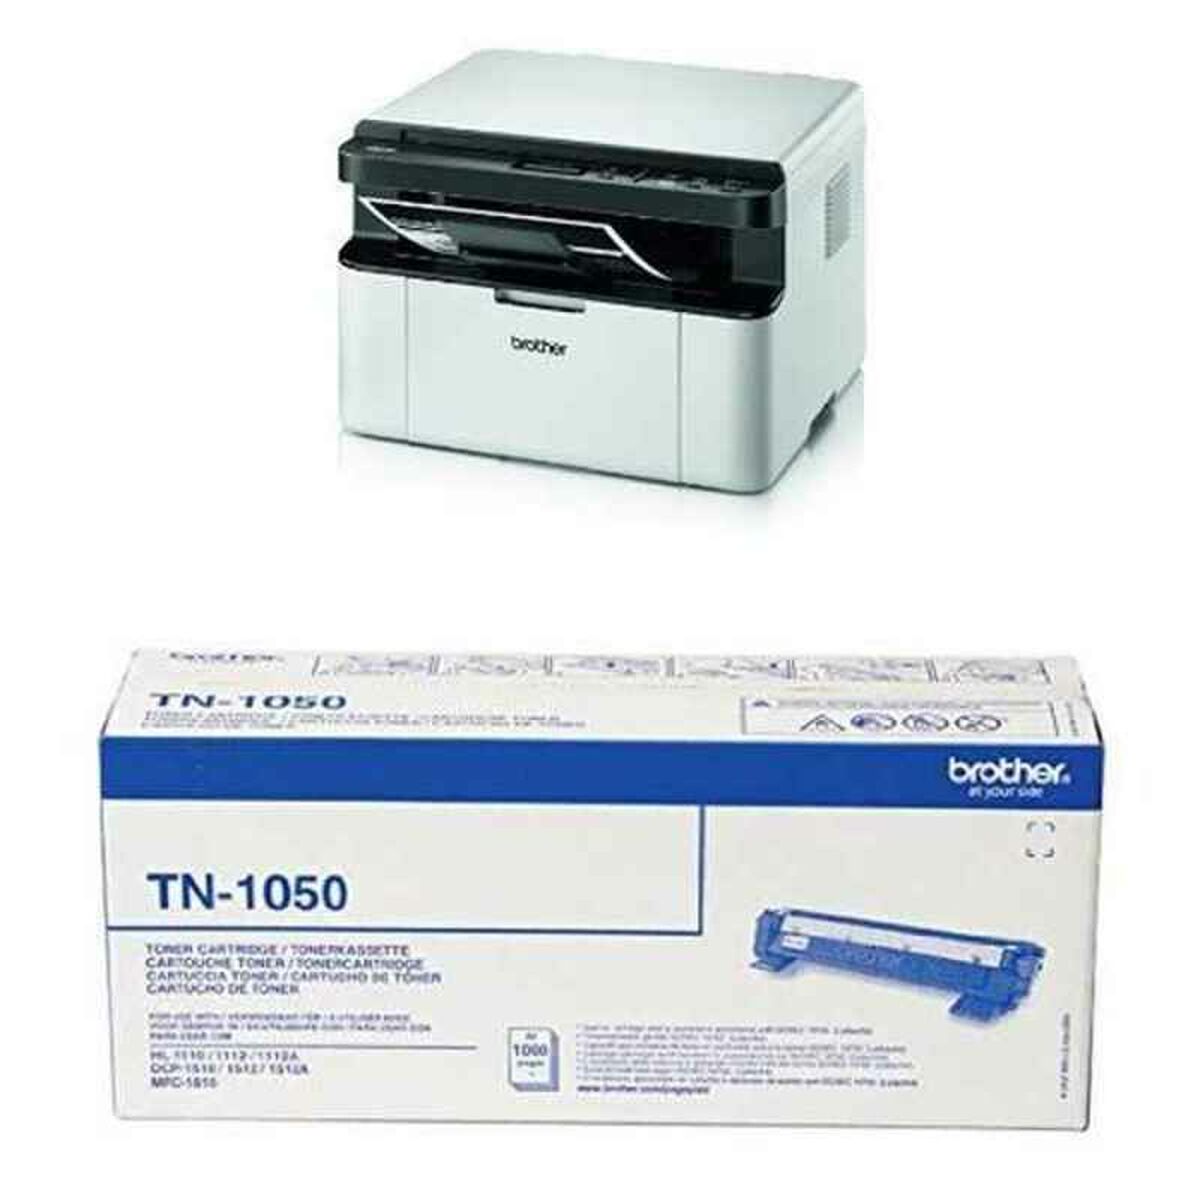 Printer Brother 938492 20 ppm 32 MB USB/Wifi